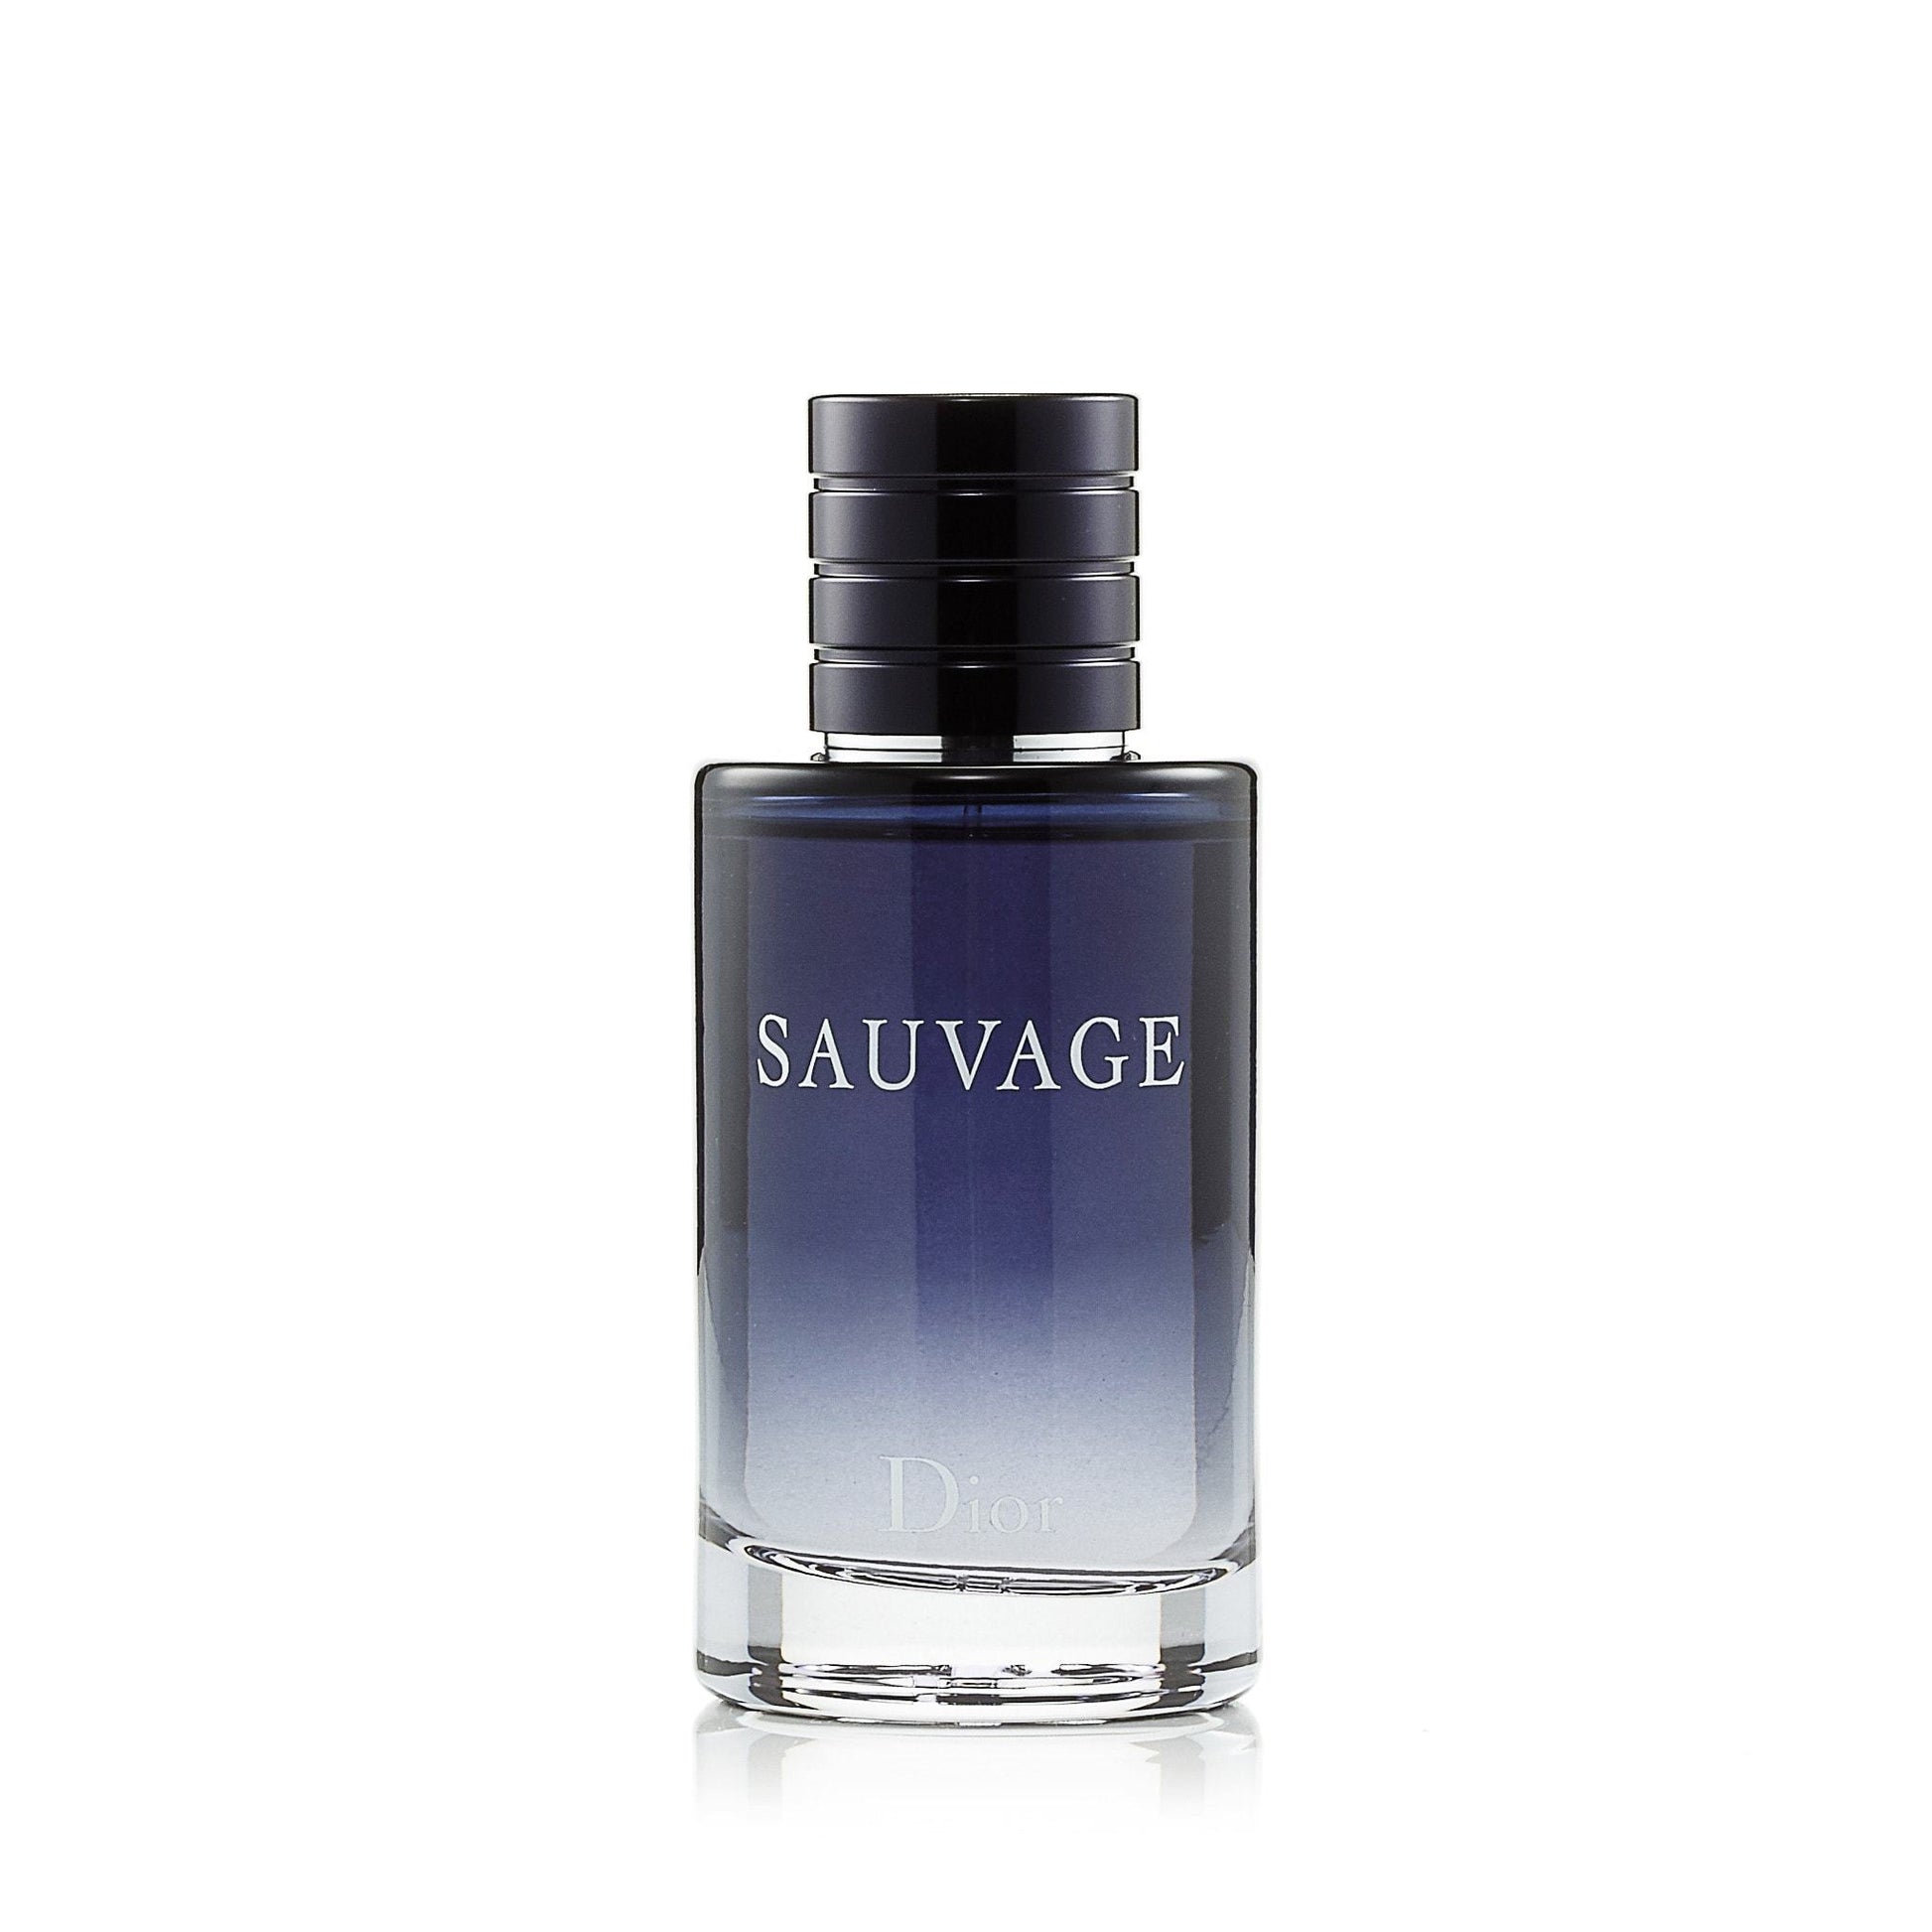 Sauvage Eau de Toilette Spray for Men by Dior, Product image 7